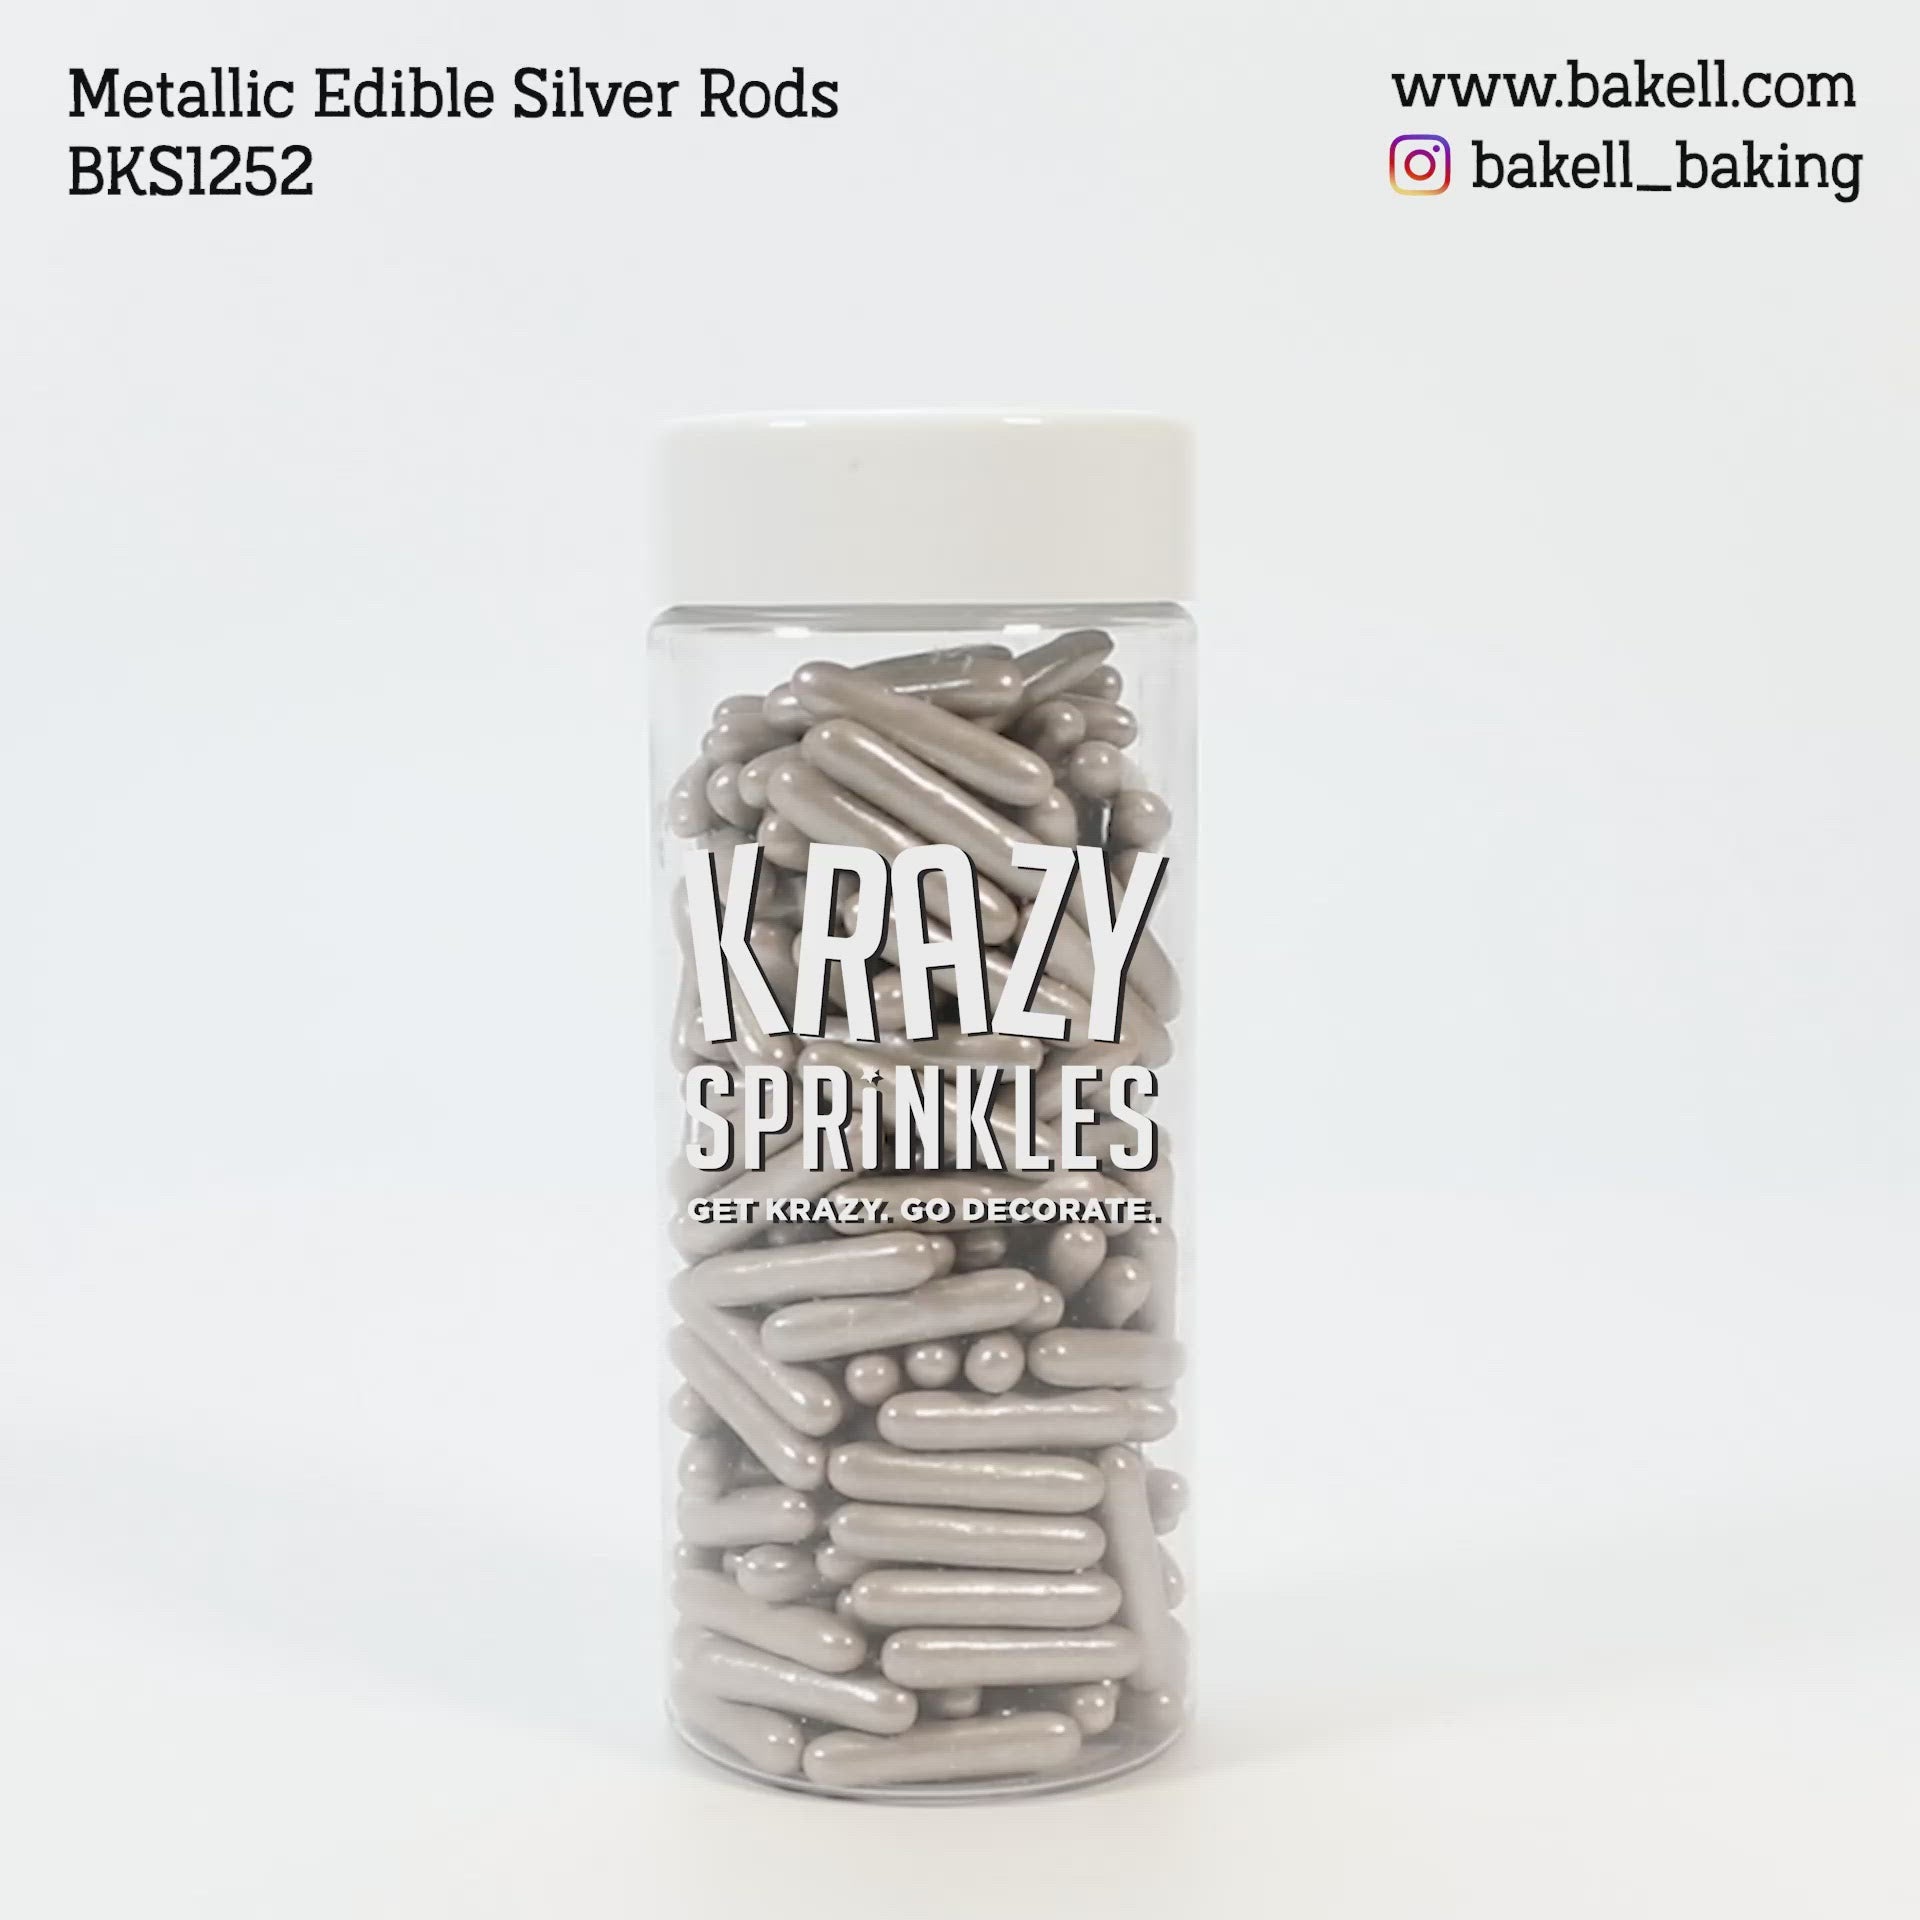 Metallic Silver Rods Sprinkles Wholesale (24 units per/ case)